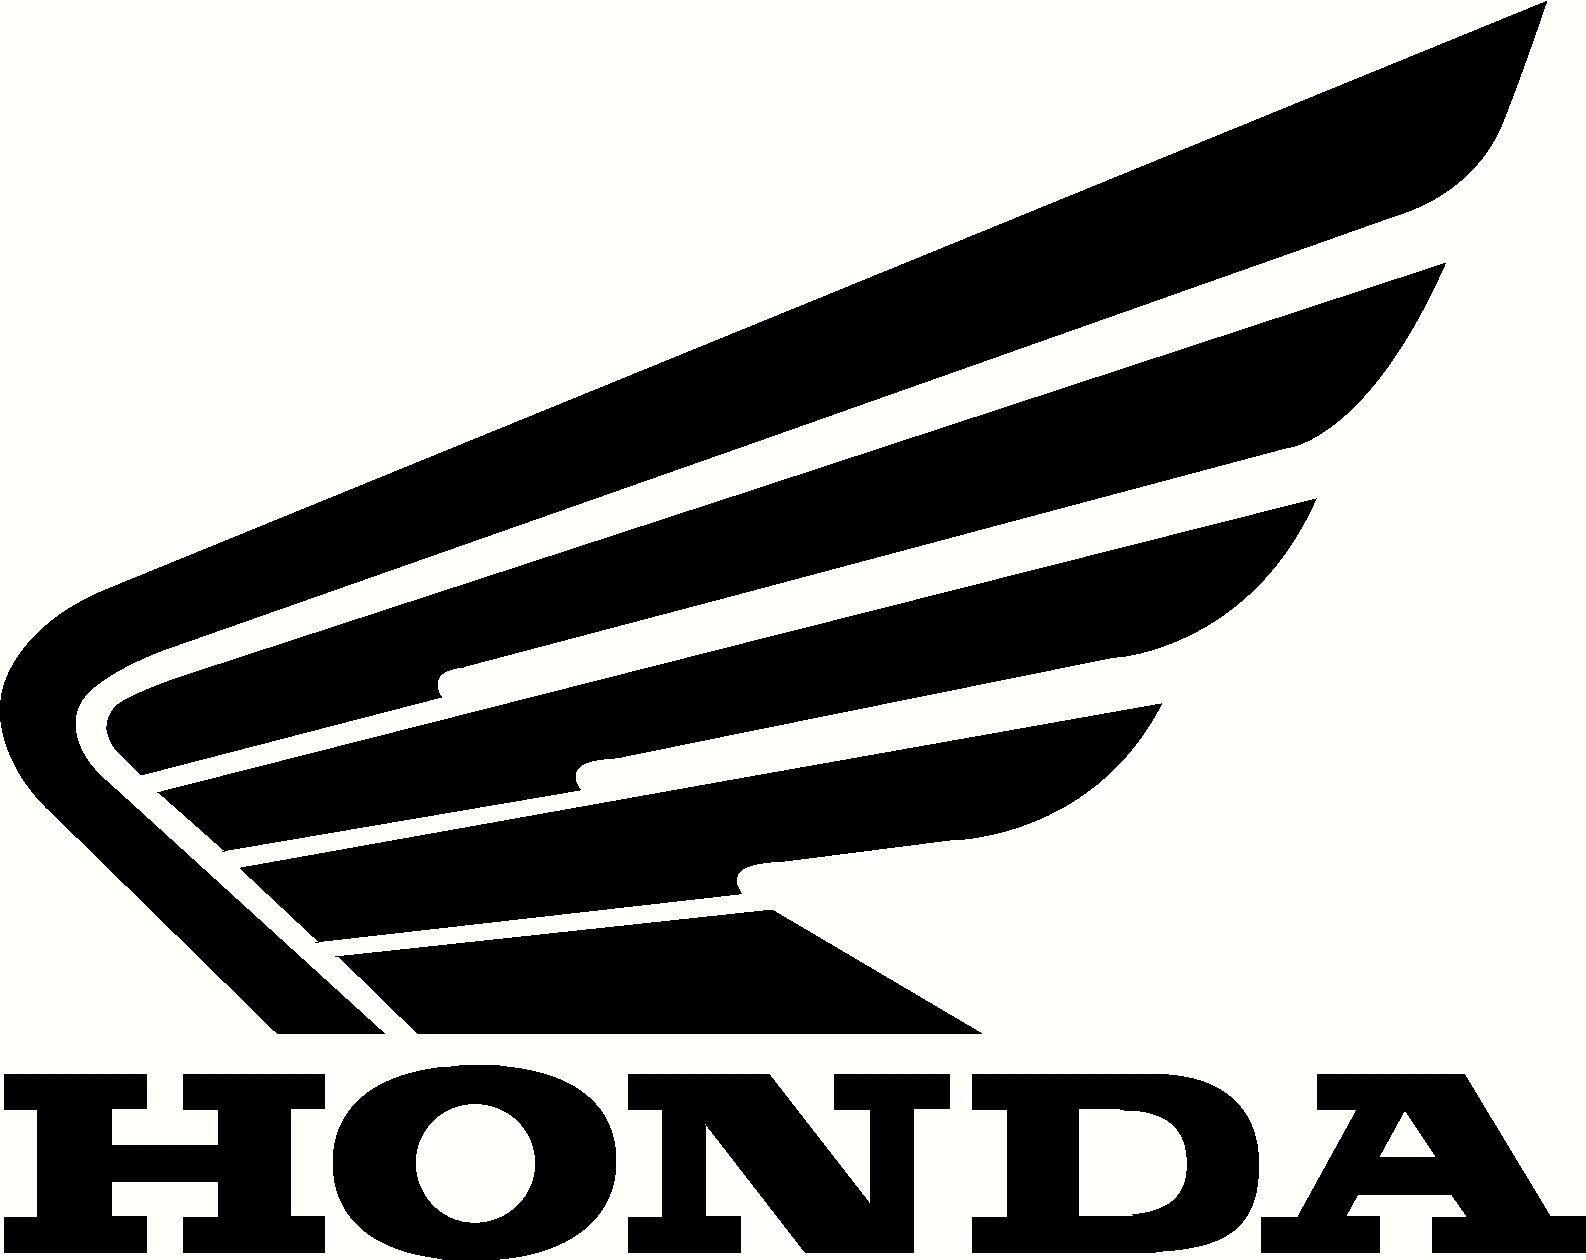 Honda Bike Logo - Pin by Ross Robinson on motorcycles logos | Pinterest | Motorcycle ...